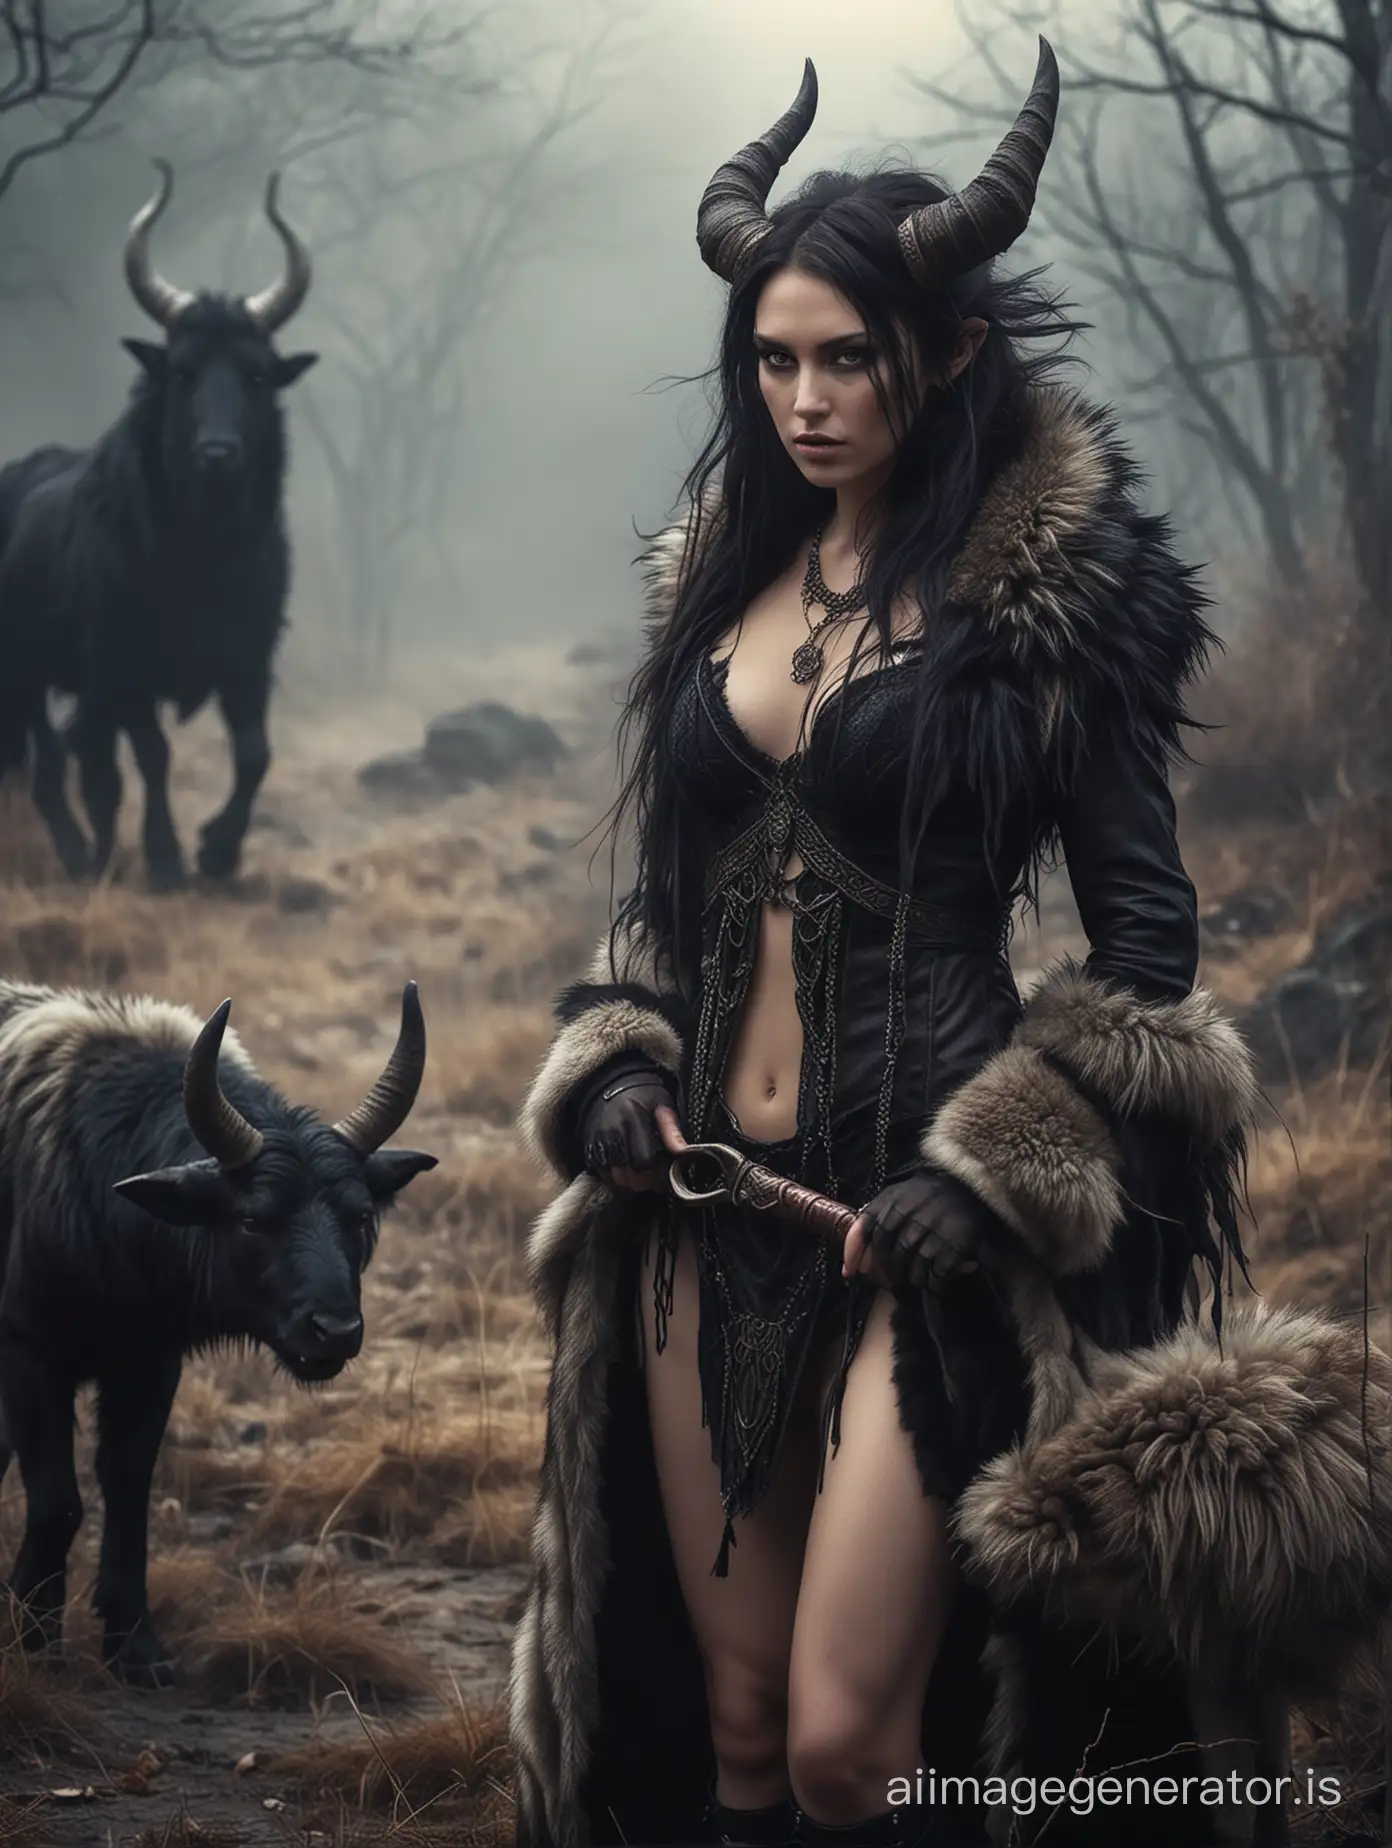 Female-Druid-and-Animal-Companion-Hunting-in-Dark-Fantasy-Landscape